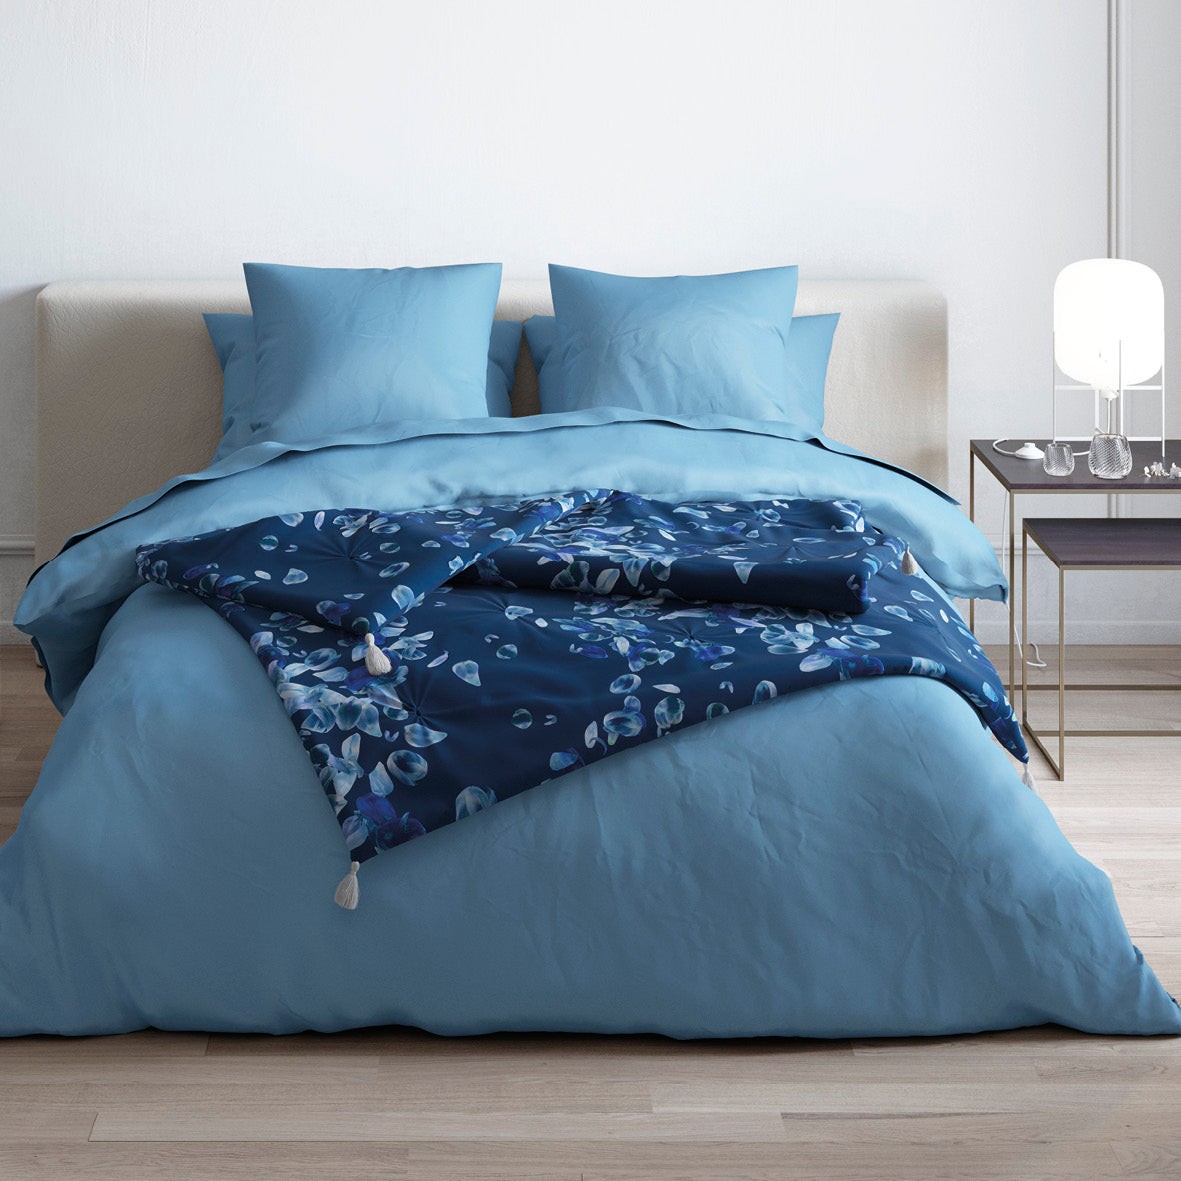 Quilt with tassels - Aurore Blue